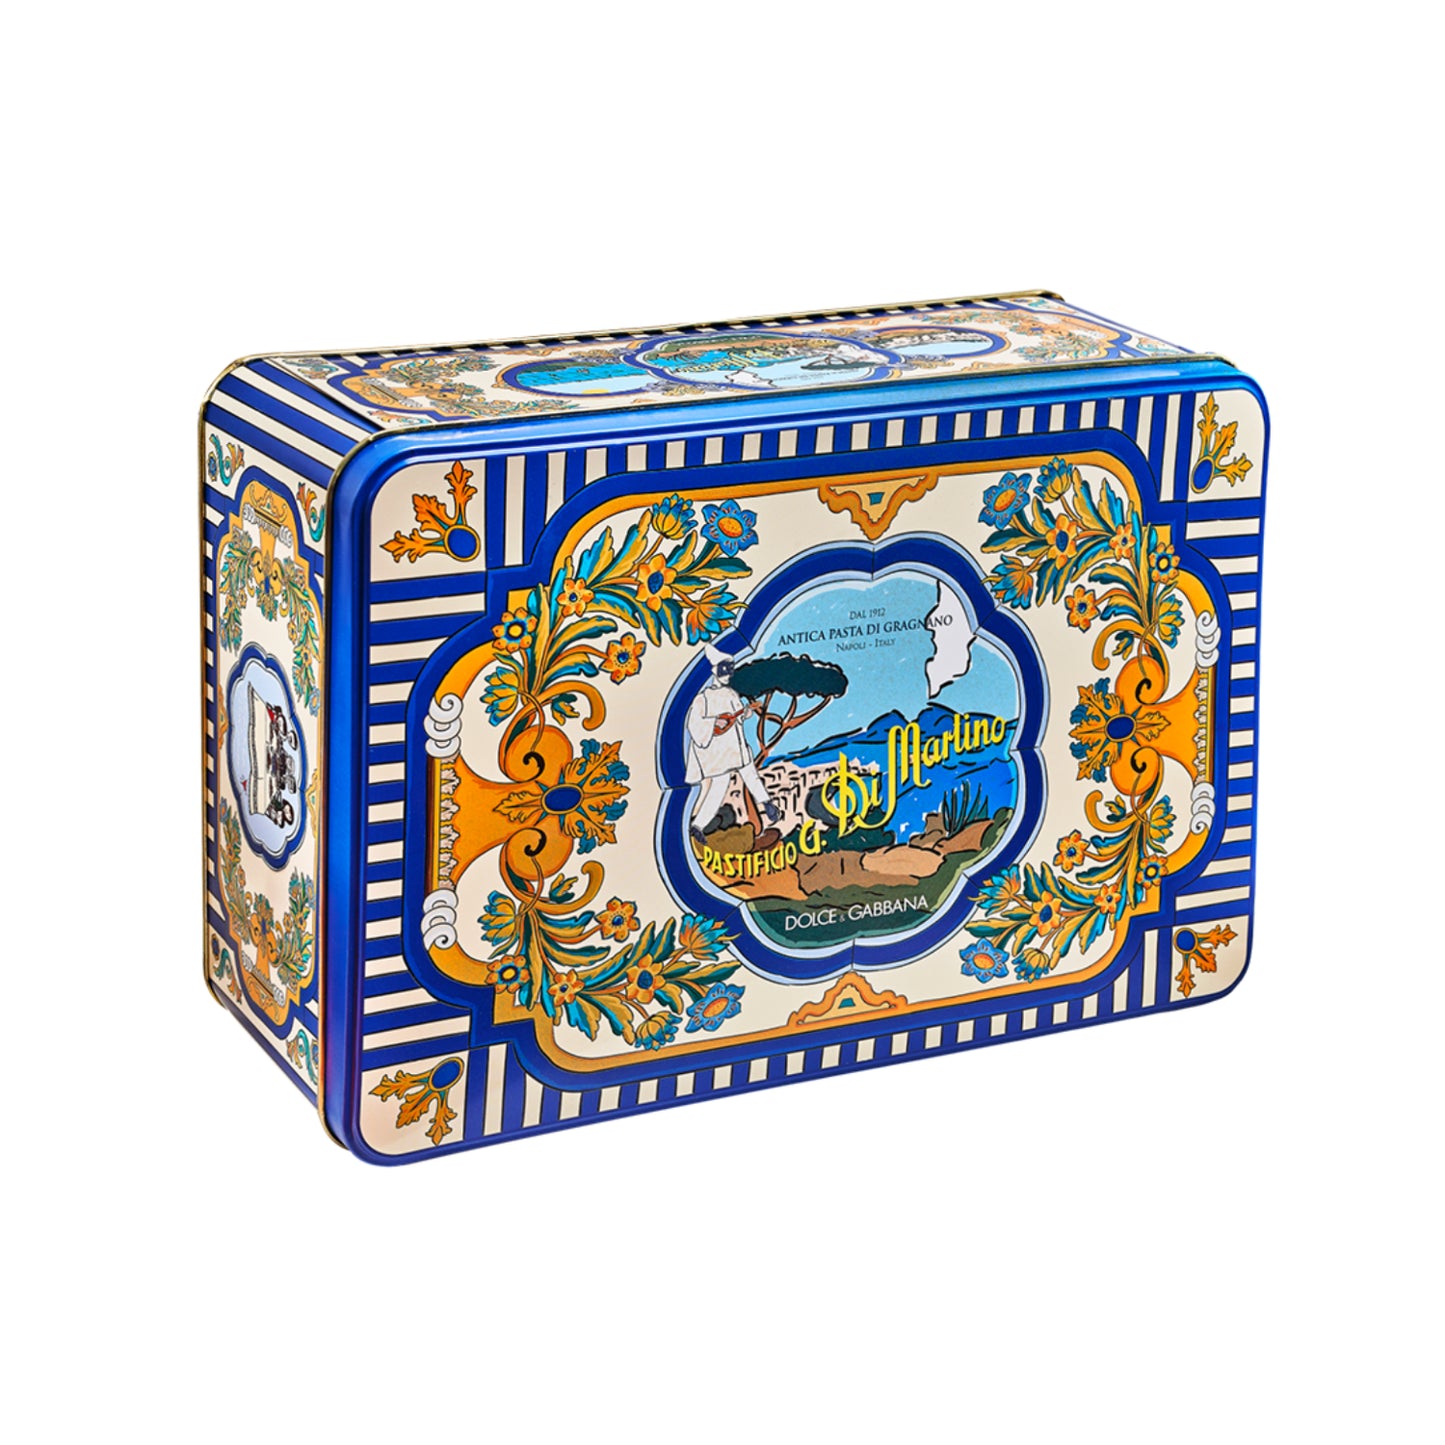 Napoli D&G Pasta Gift Box-Pasta And An Apron